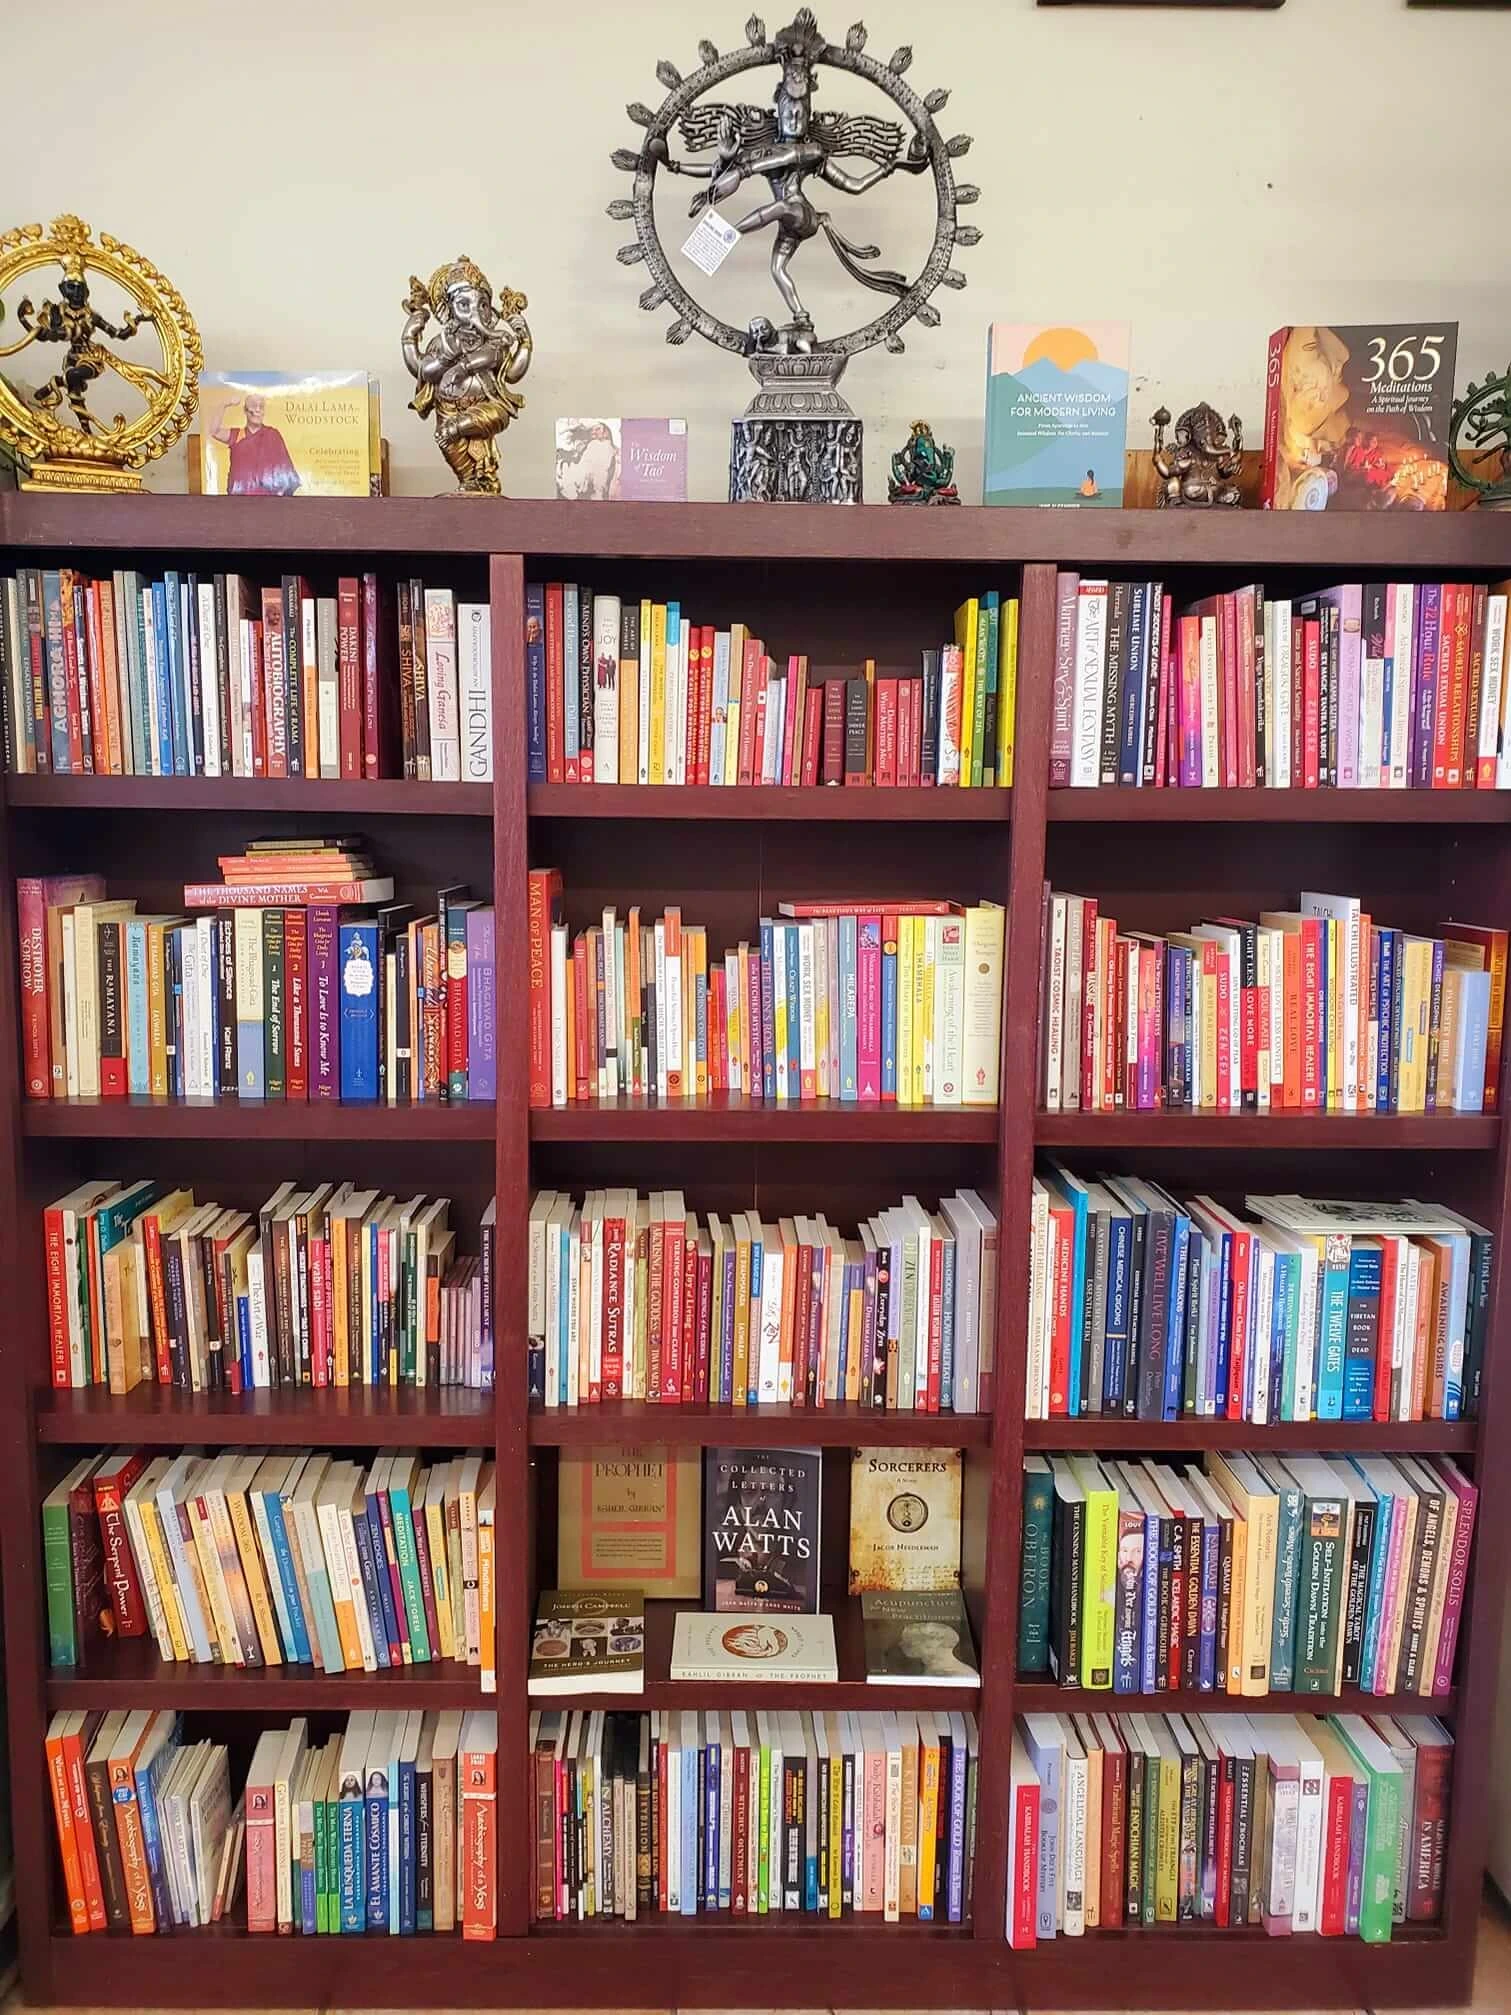 A large shelf of books